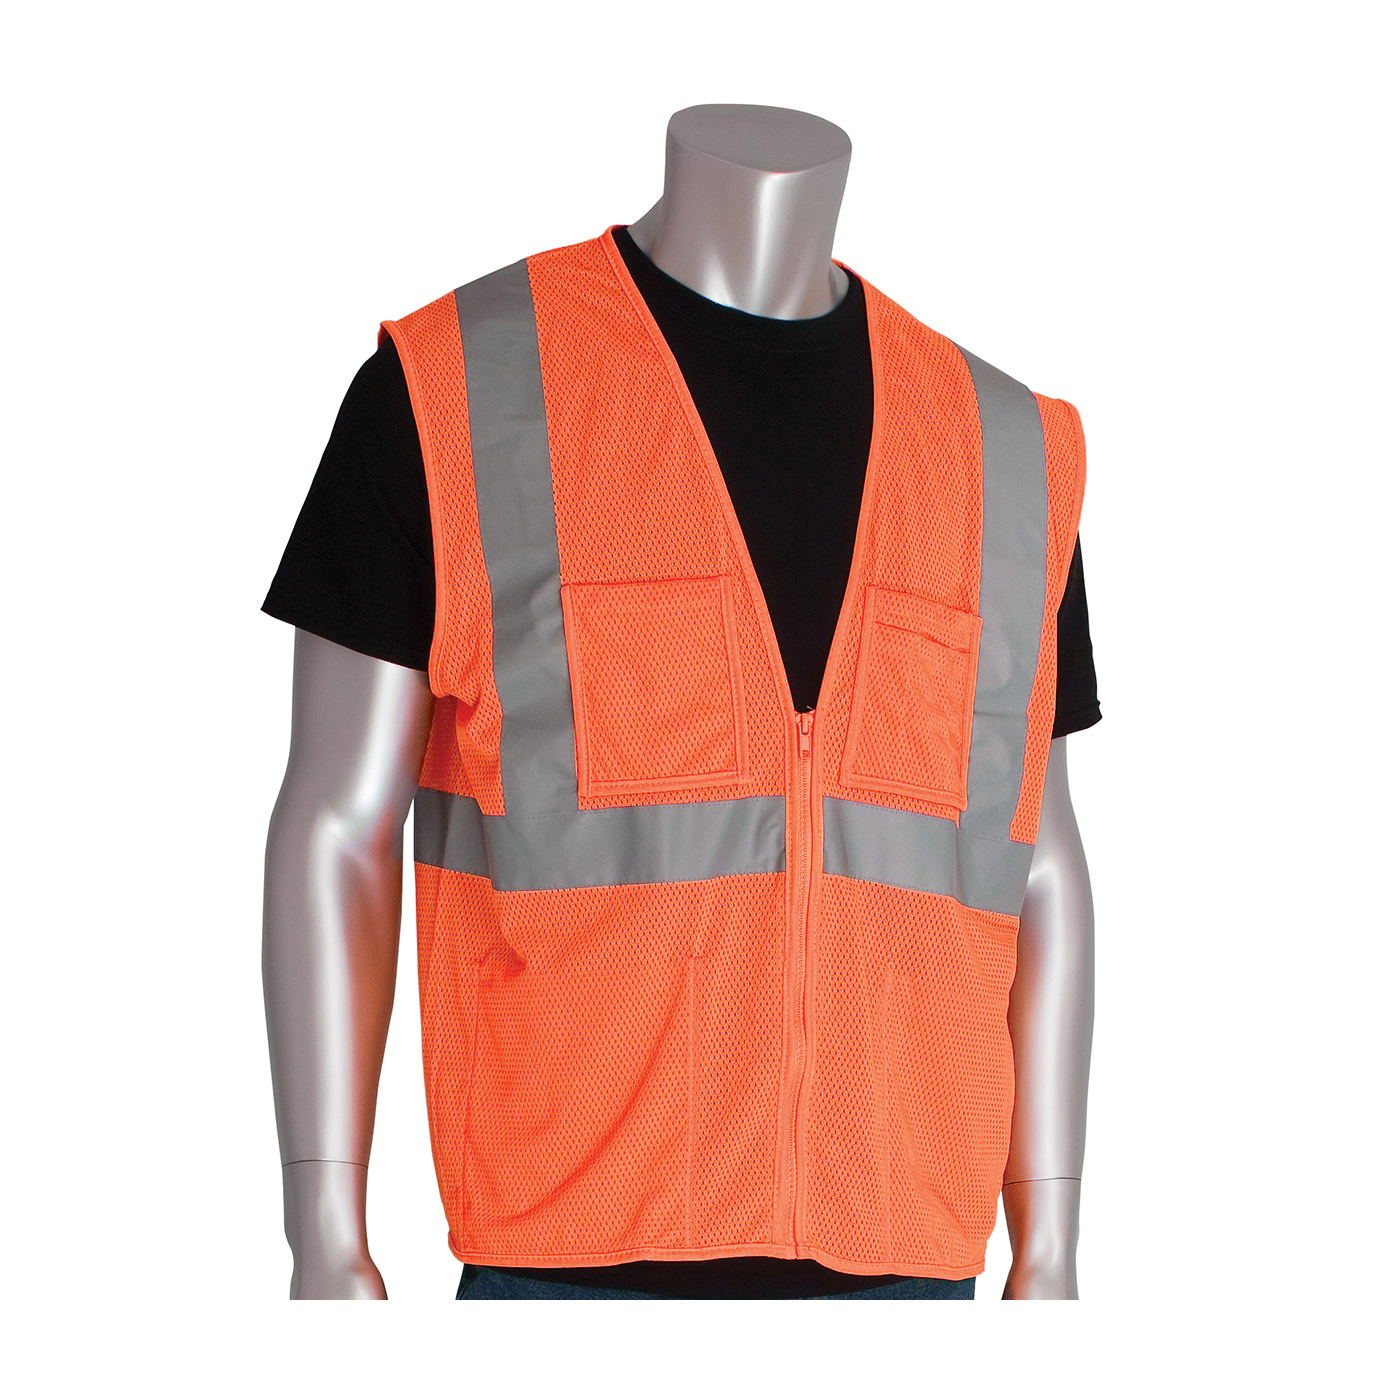 PIP® 302-MVGZ4POR-XL Safety Vest, XL, Hi-Viz Orange, Polyester Mesh, Zipper Closure, 4 Pockets, ANSI Class: Class 2, Specifications Met: ANSI 107 Type R